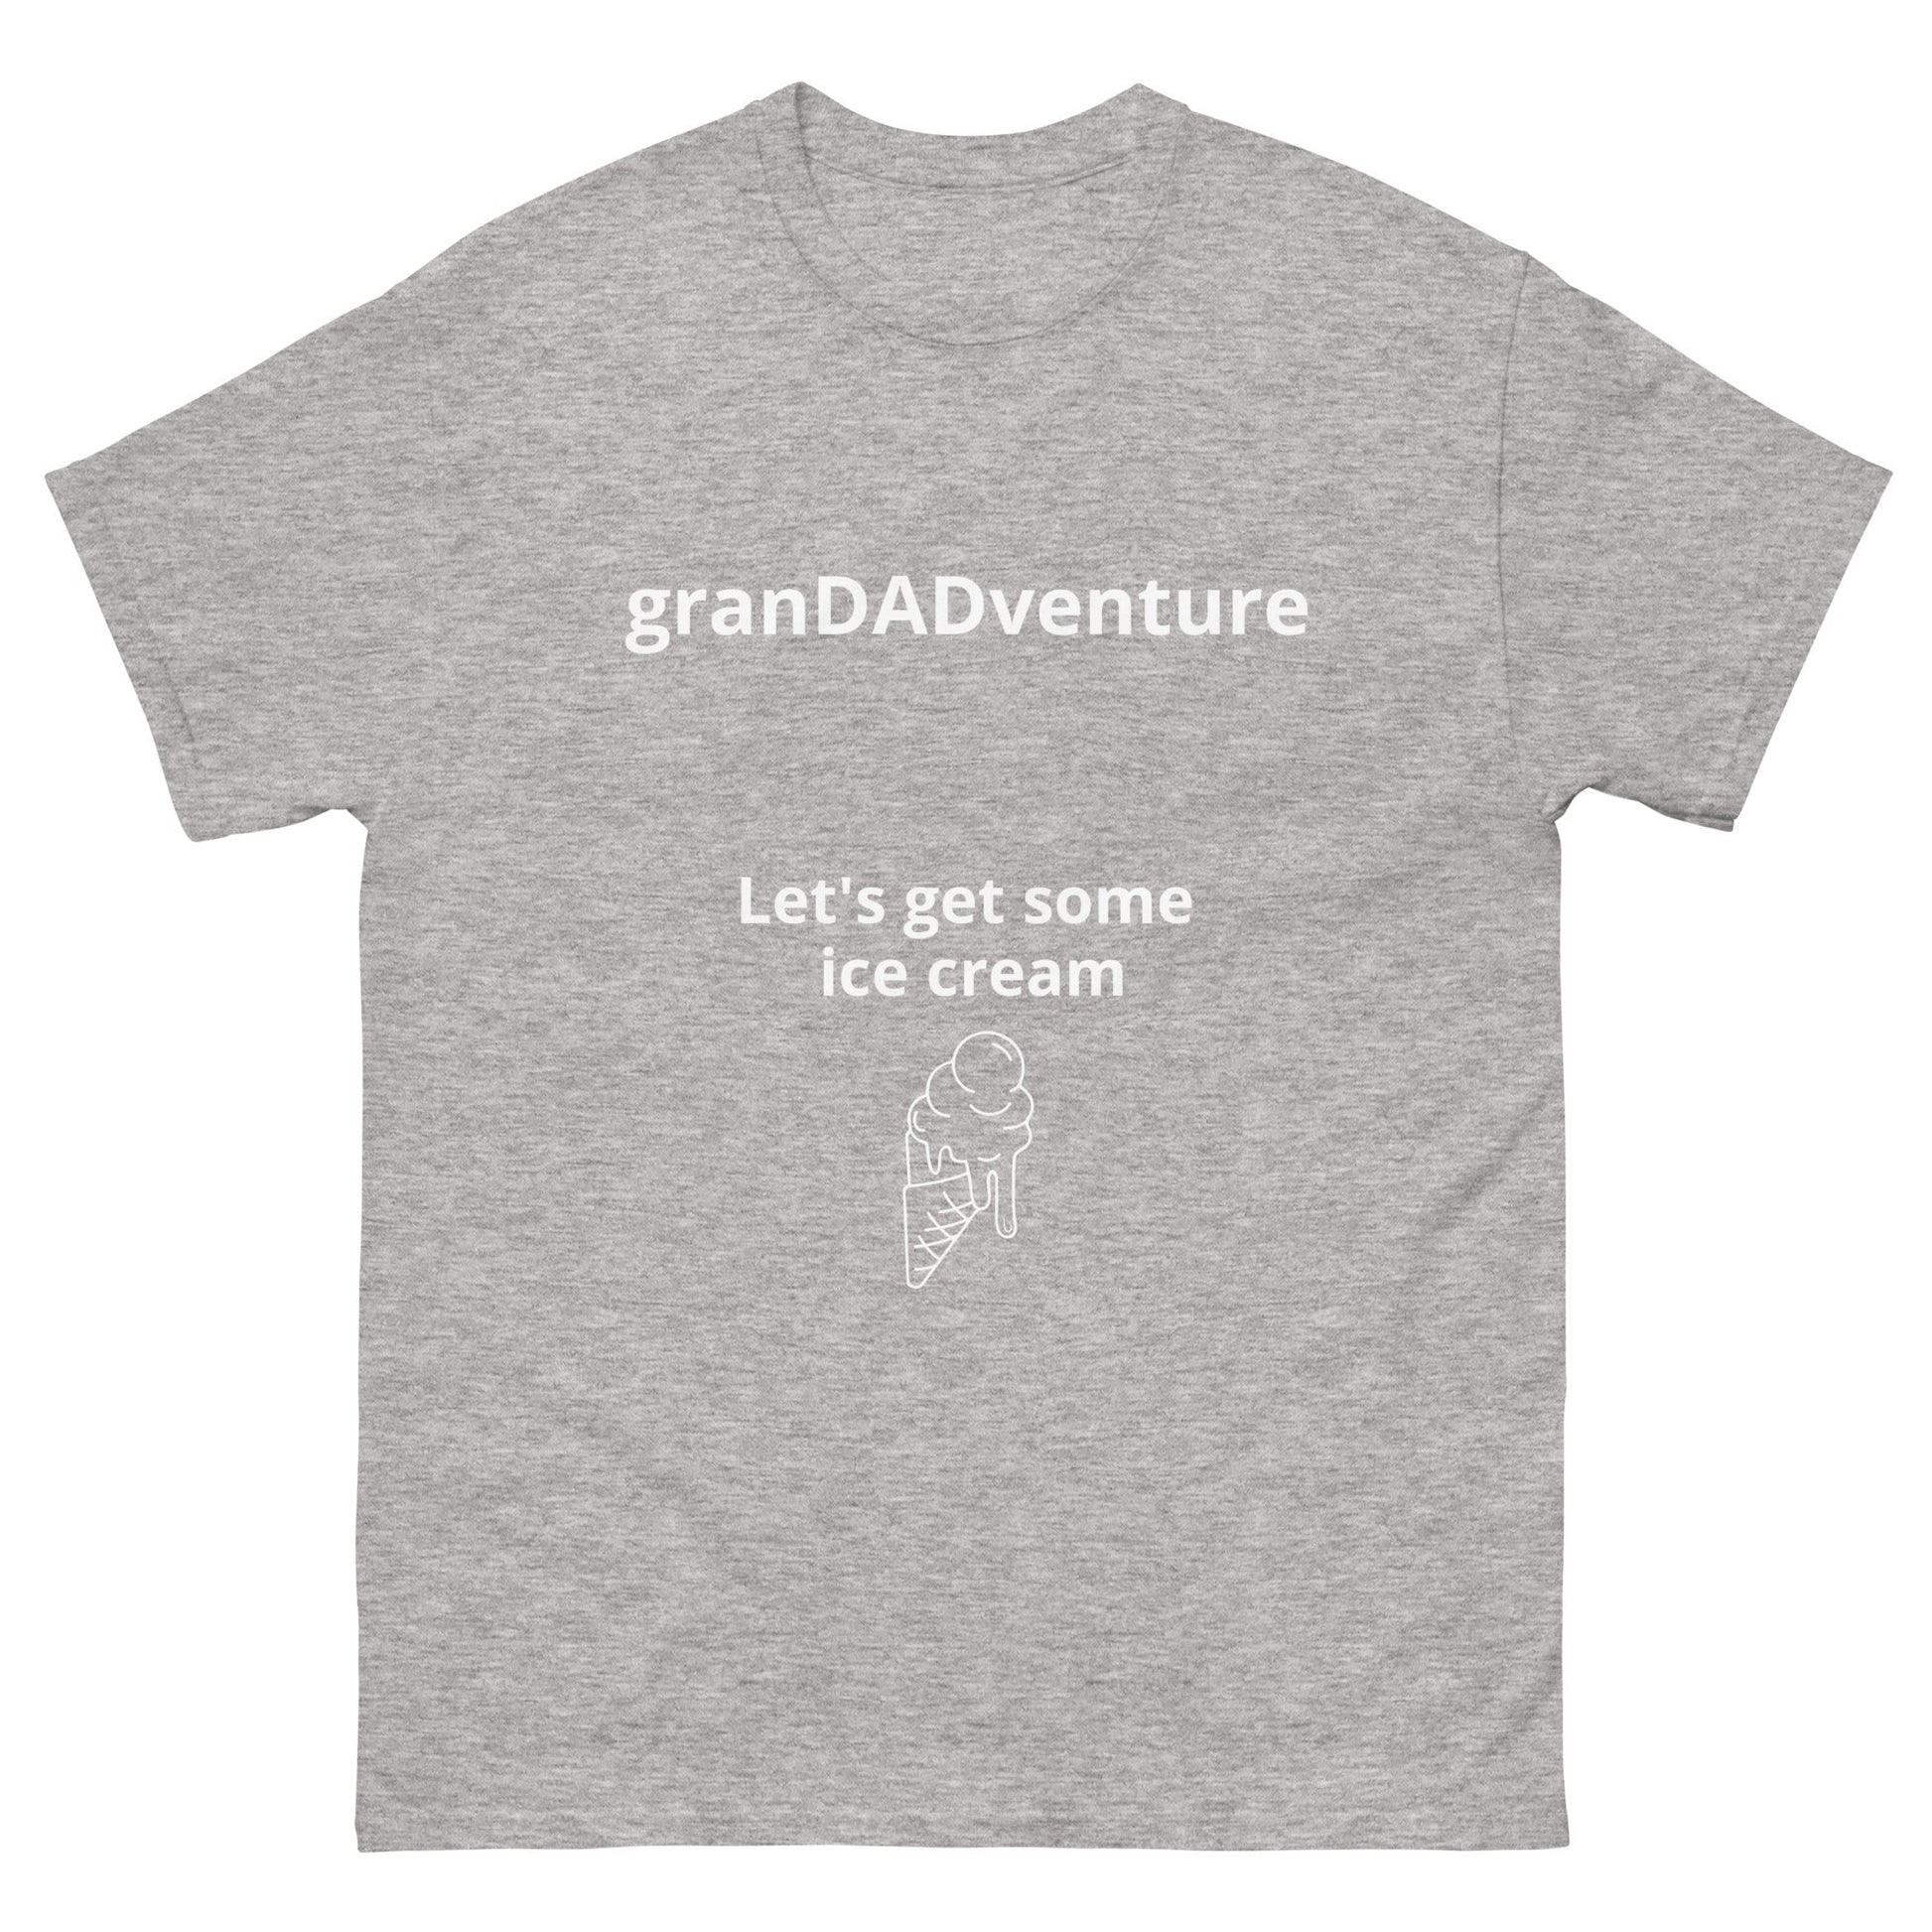 Grandpa T-Shirt | dAdventure - dAdventure